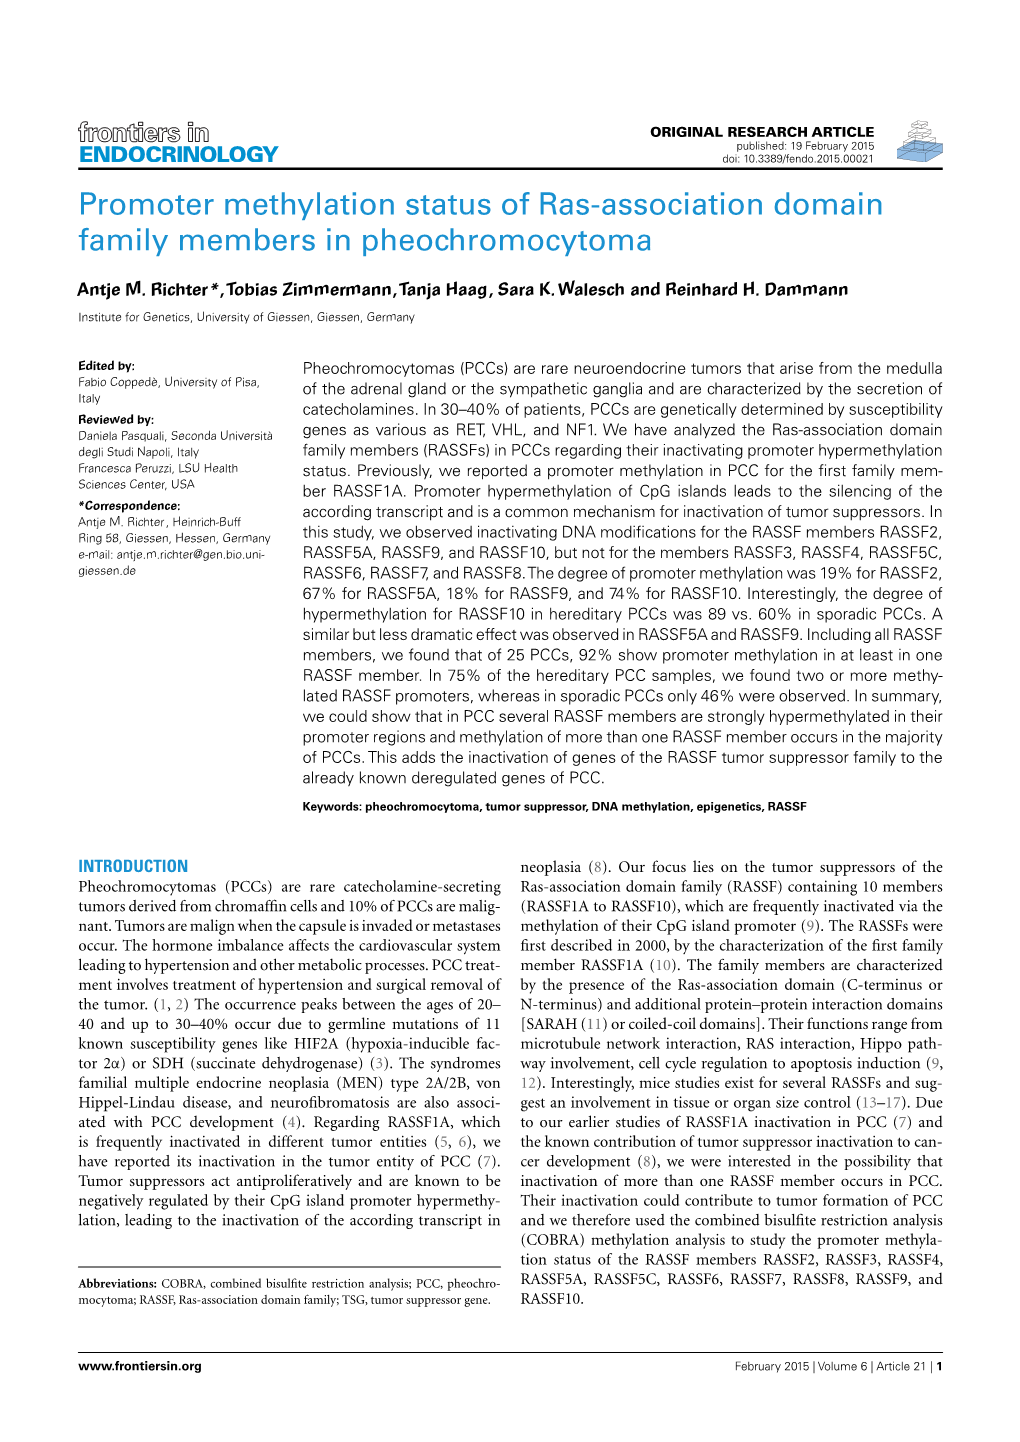 Promoter Methylation Status of Ras-Association Domain Family Members in Pheochromocytoma